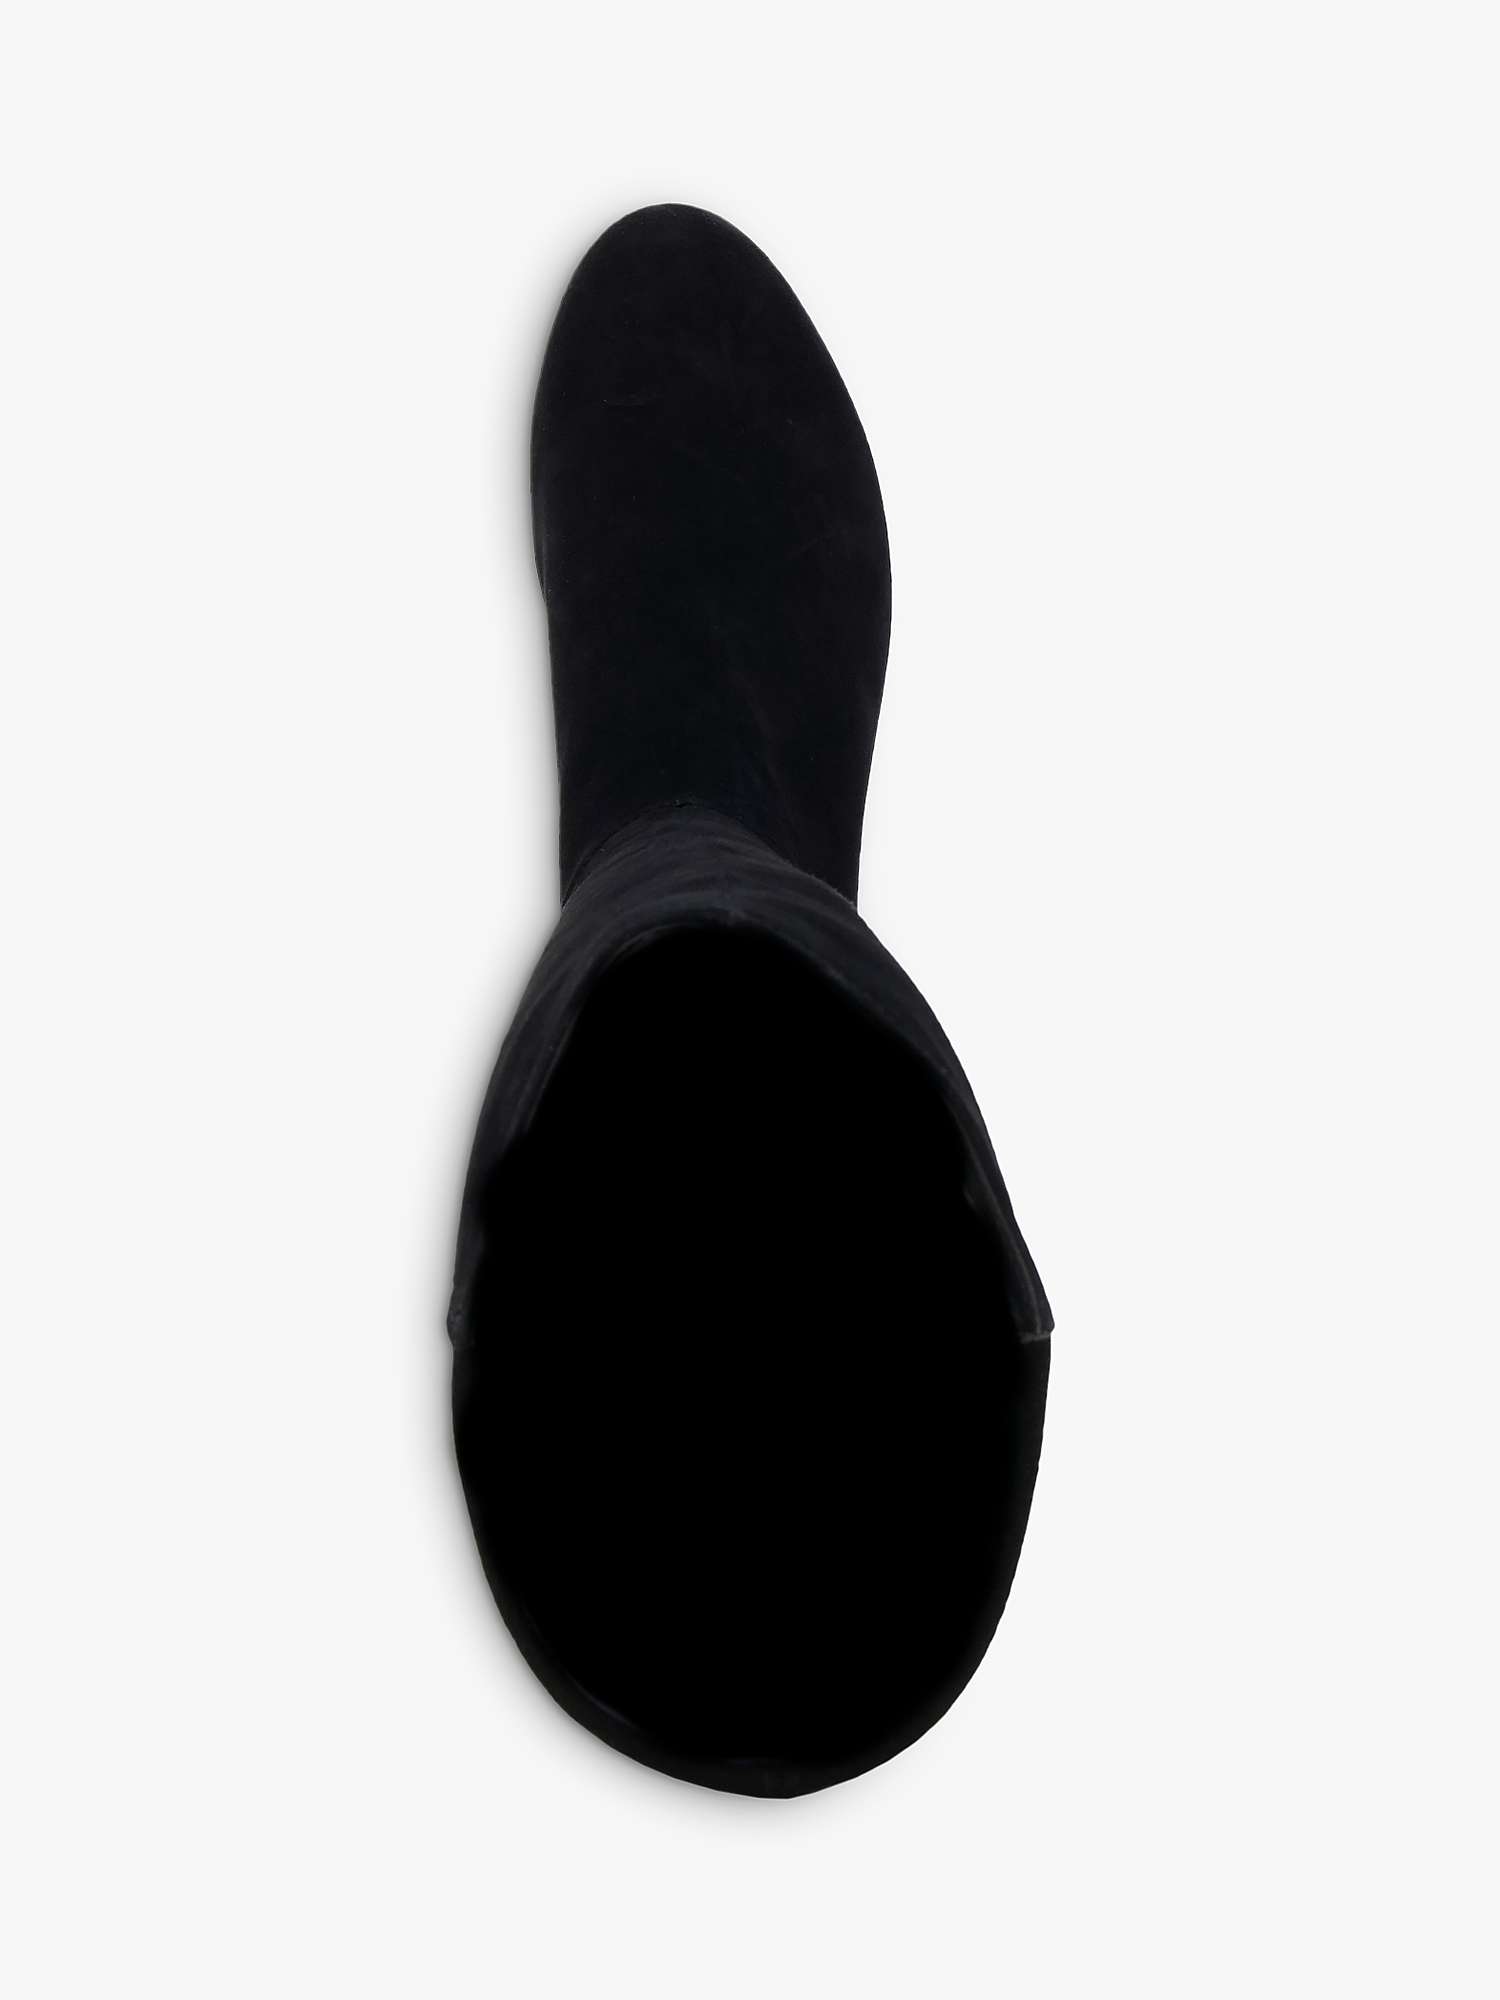 Buy Dune Wide Fit Tayla Suede Knee Length Boot, Black Online at johnlewis.com